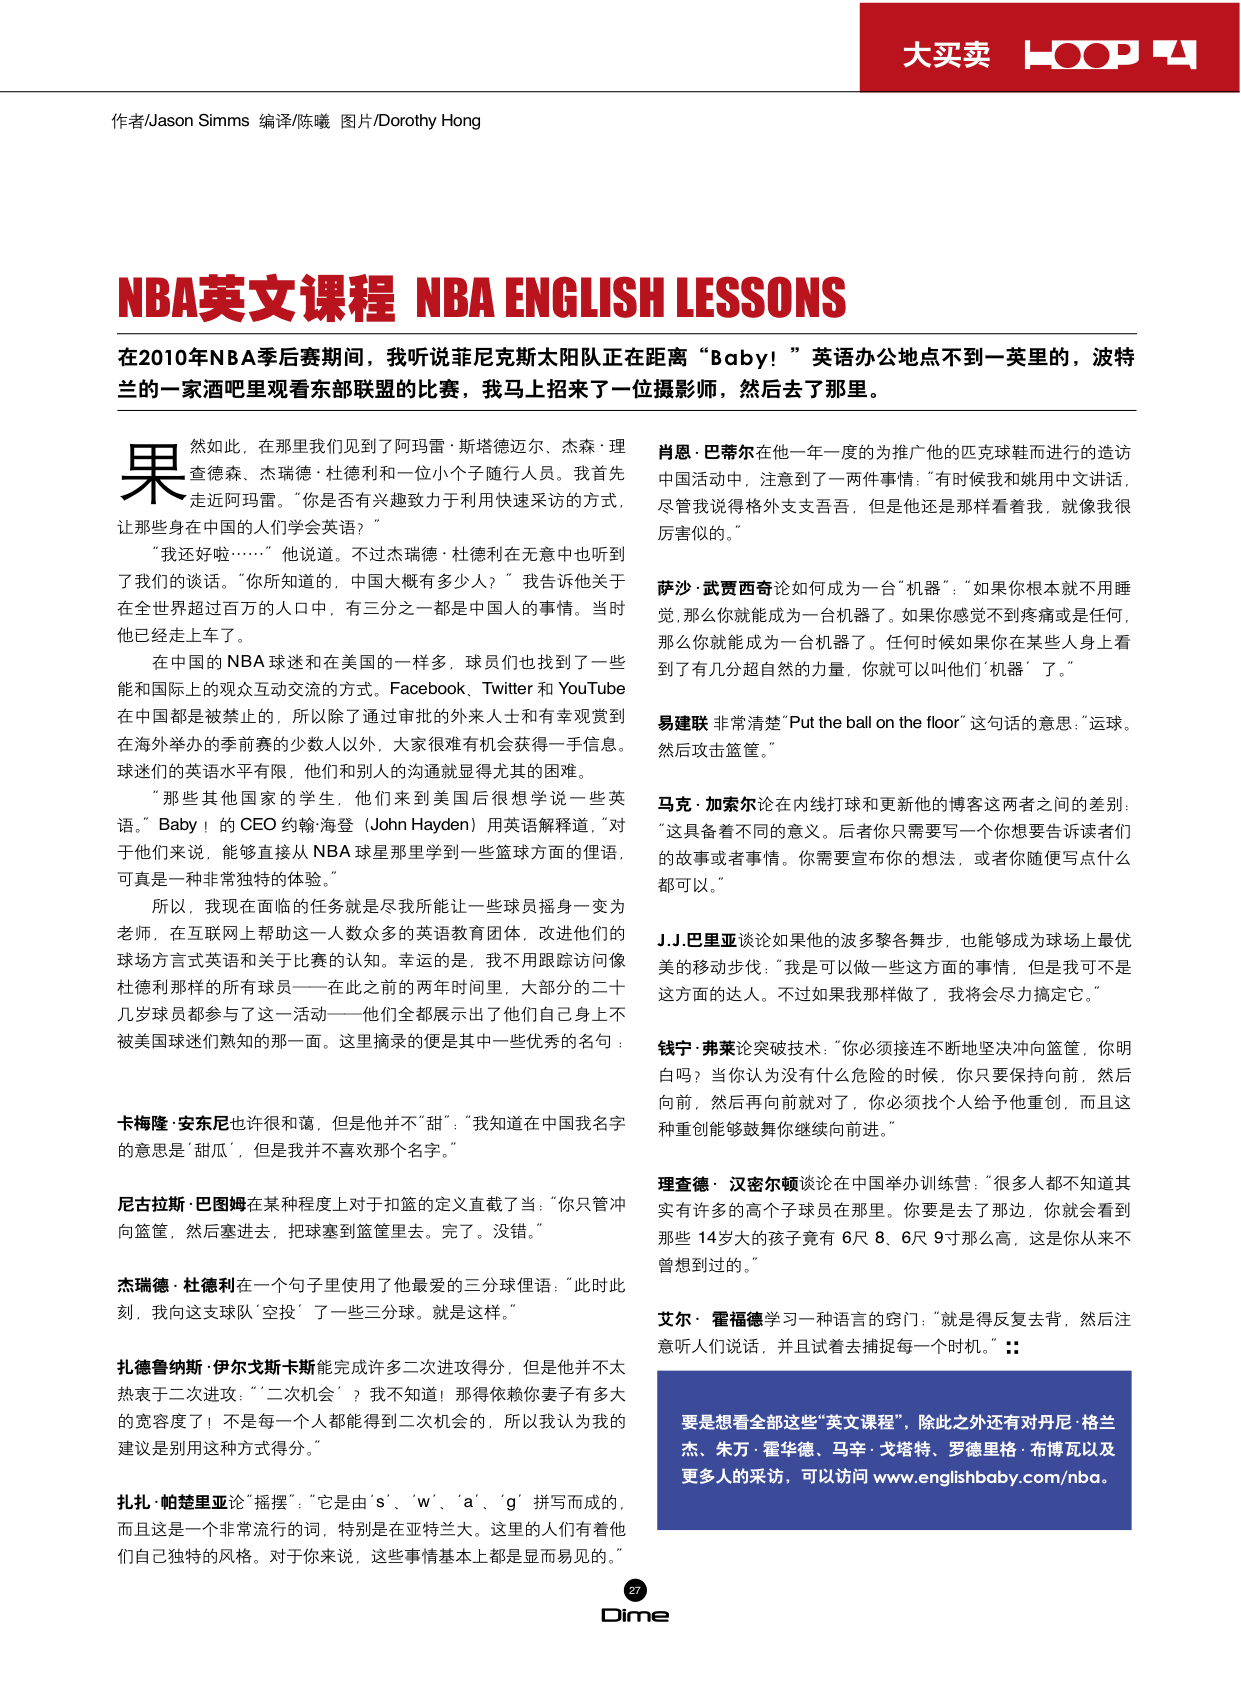 NBA English Lessons